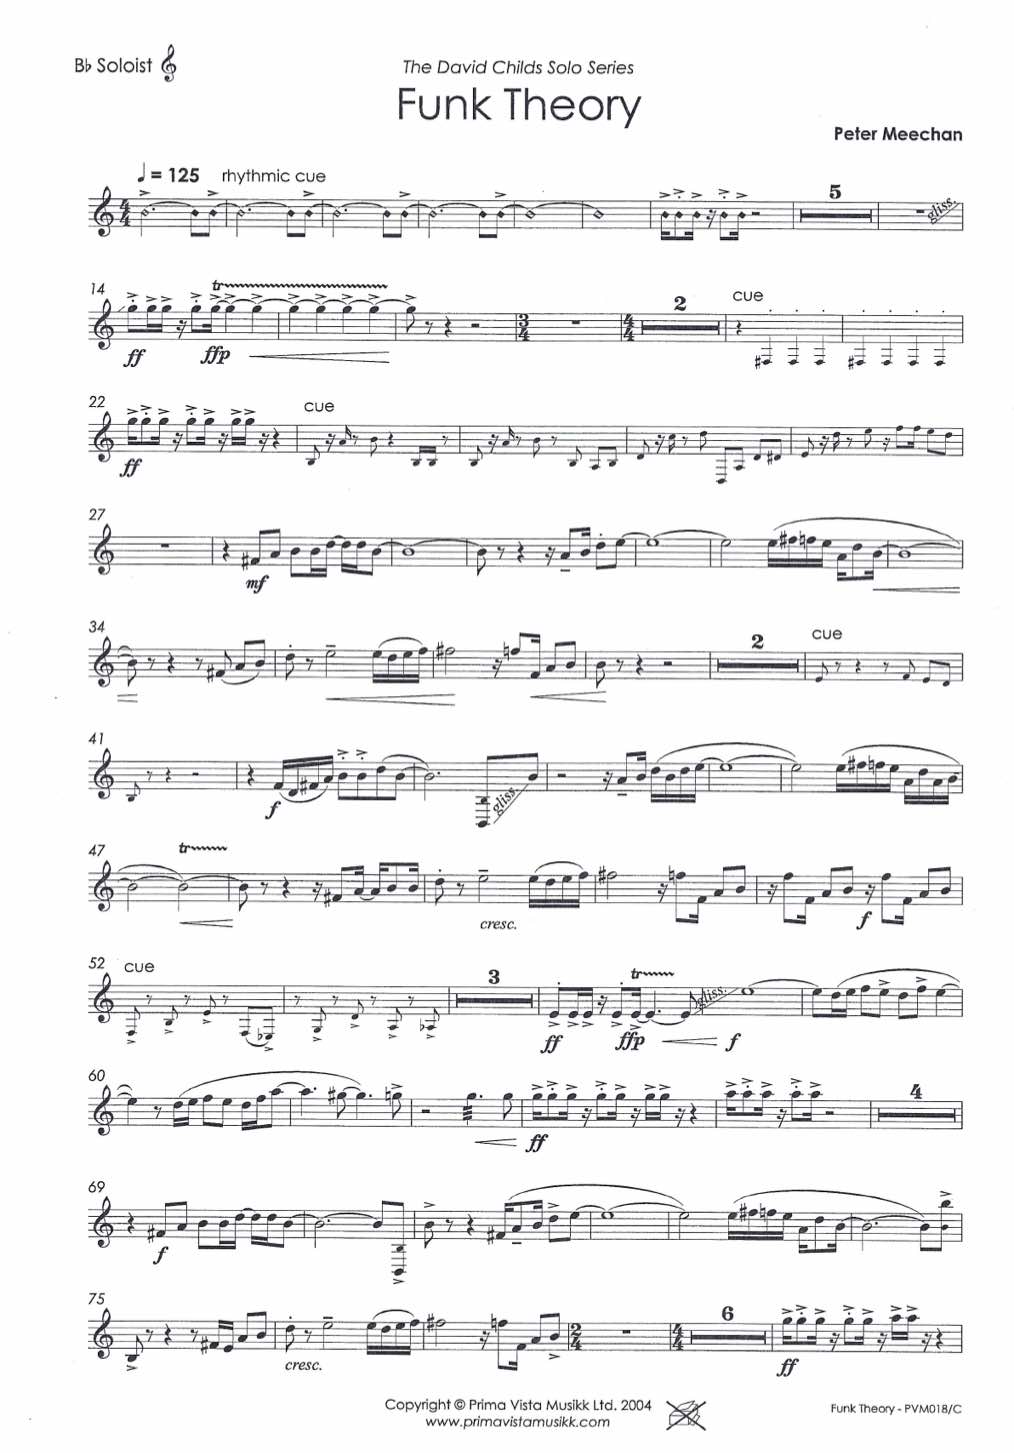 Siciliana from Partita No. 2 (G.P. Telemann) - Free Flute Sheet